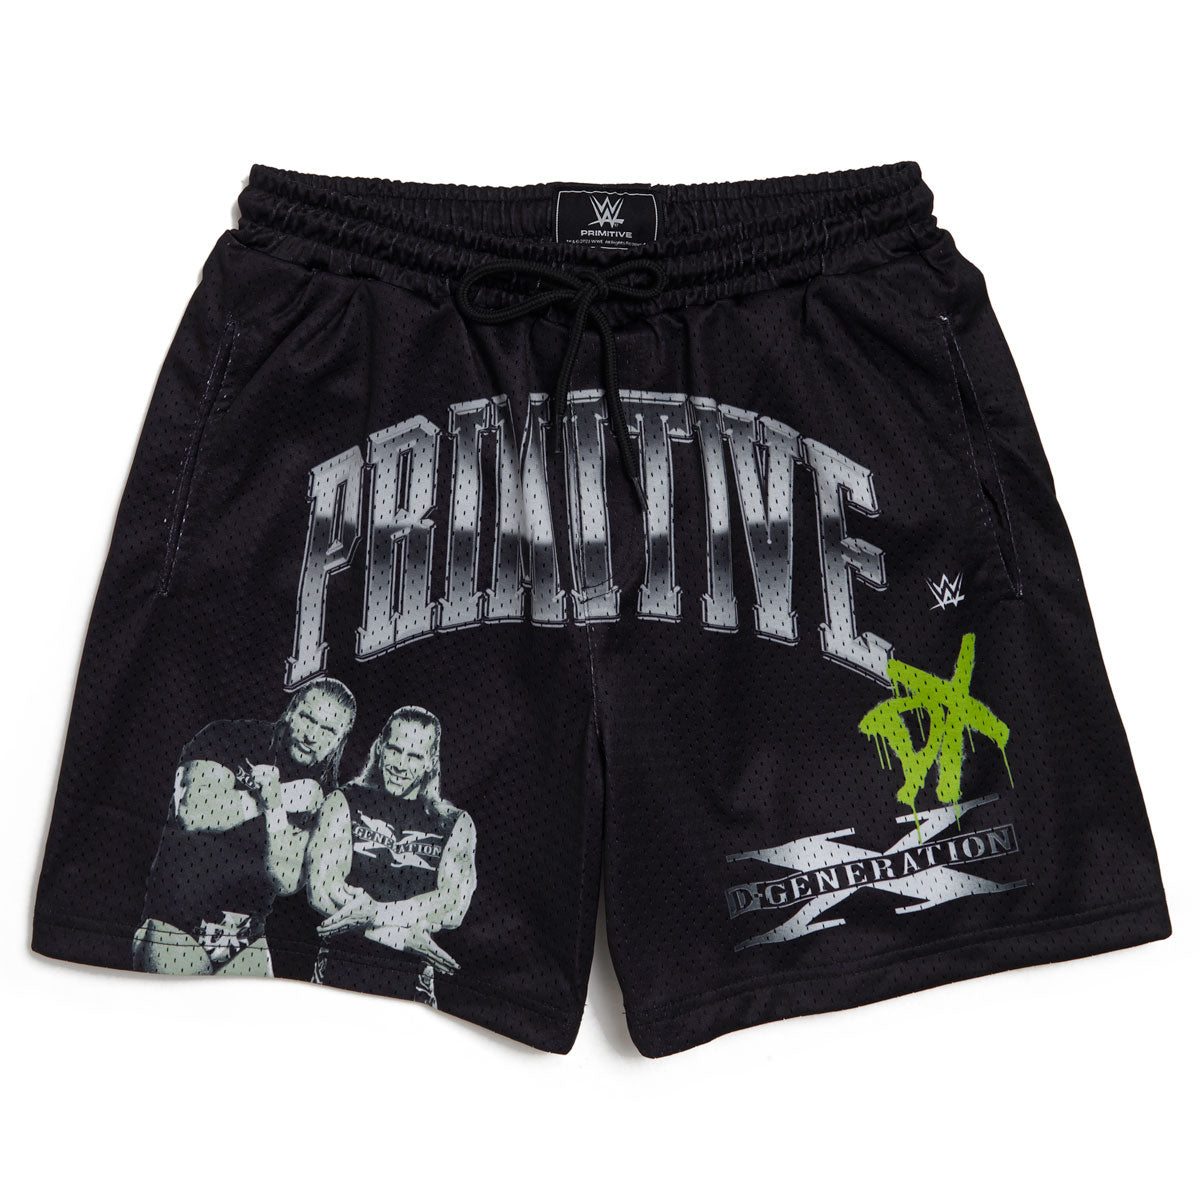 Primitive x WWE DX Mesh Shorts - Black image 1